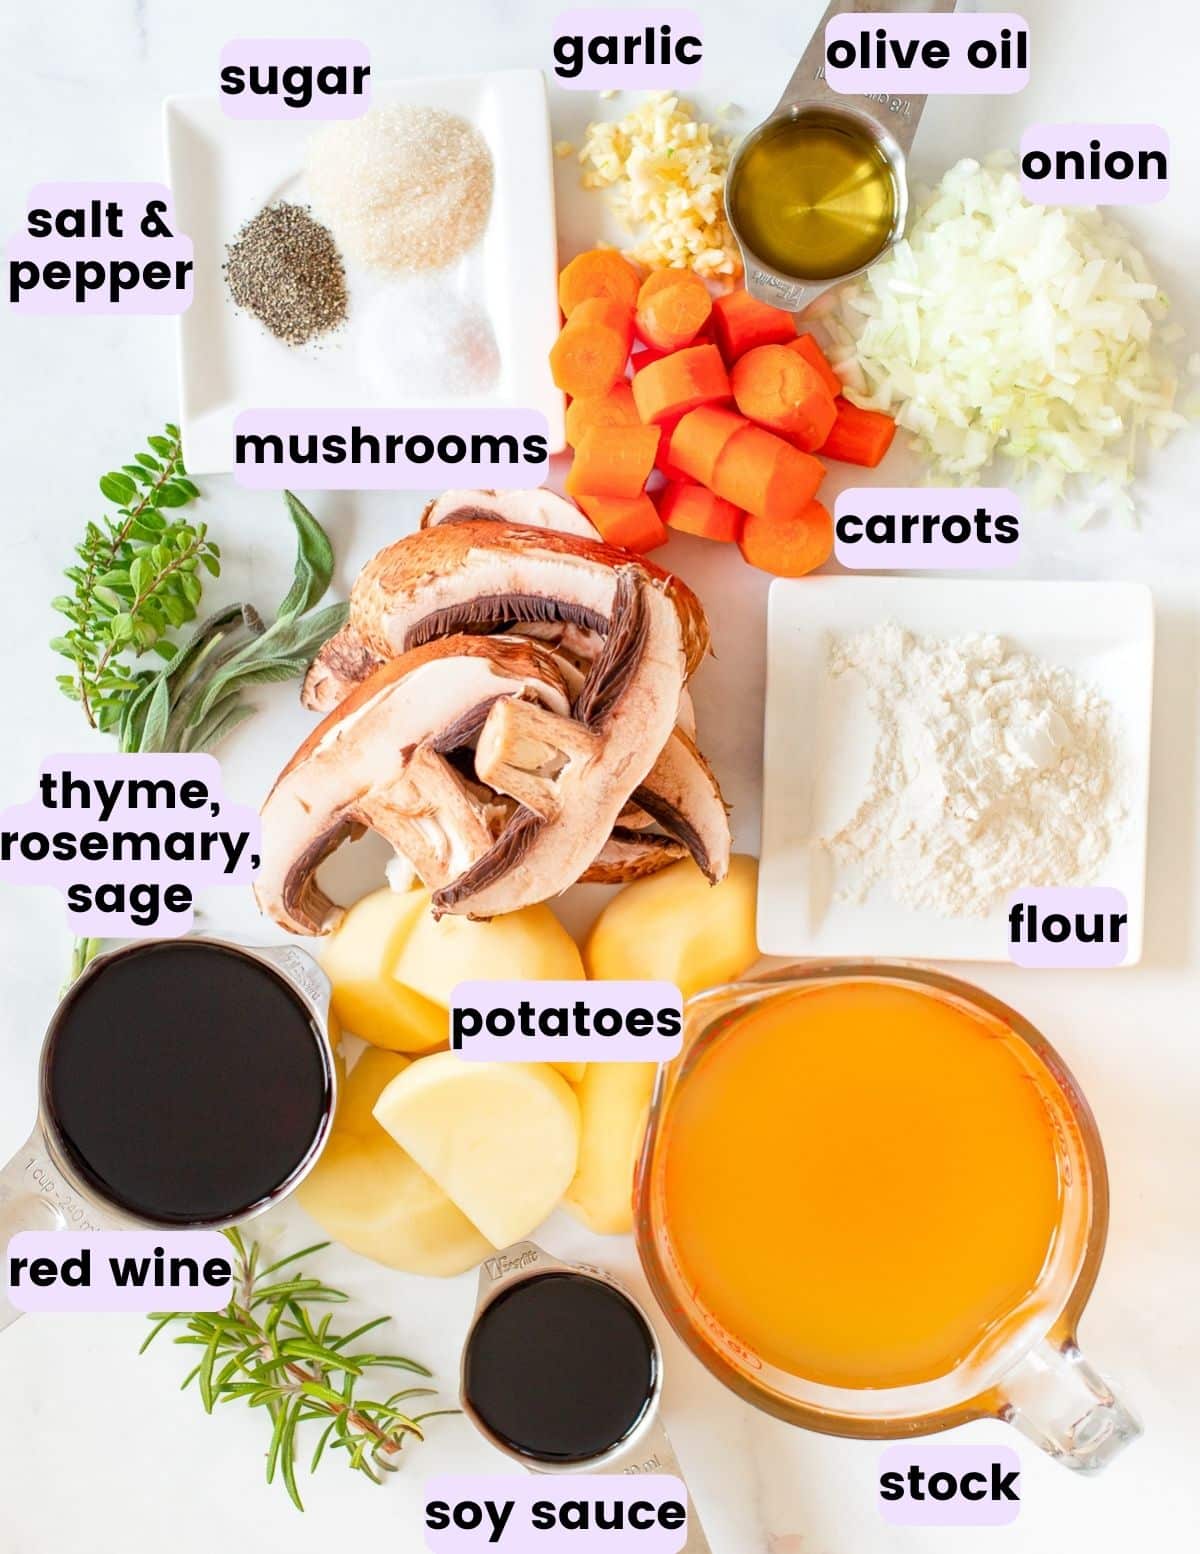 salt, pepper, sugar, garlic, olive oil, onion, carrots, mushrooms, thyme, rosemary, sage, flour, potatoes, red wine, soy sauce, stock